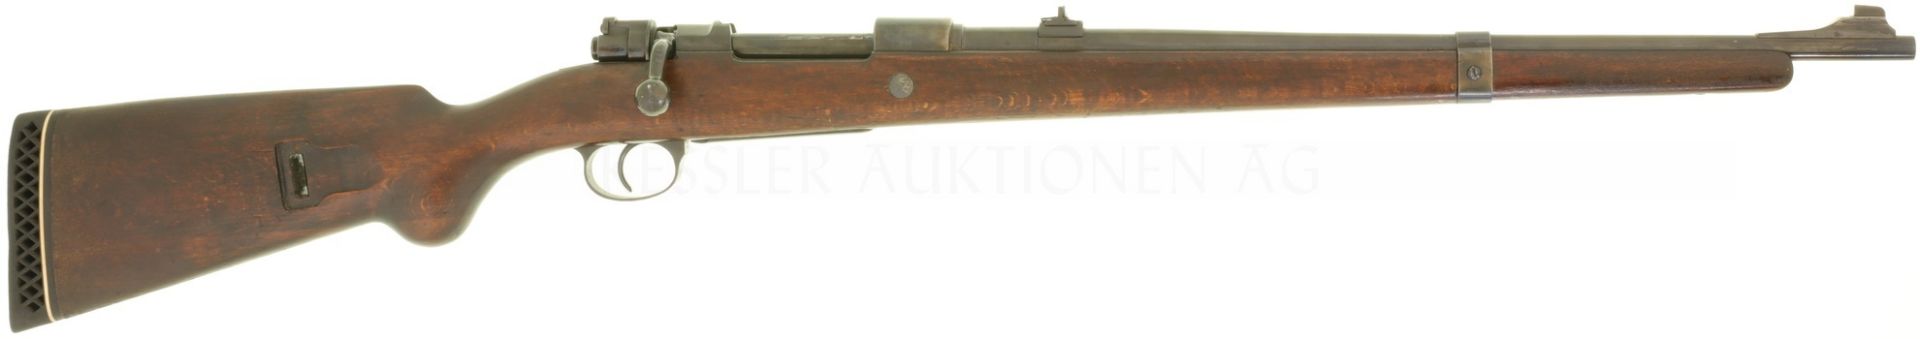 Repetierbüchse, FN-Heym, Zollkarabiner Mod. 1952, System Mauser Mod. 98, Kal. 8x57IS